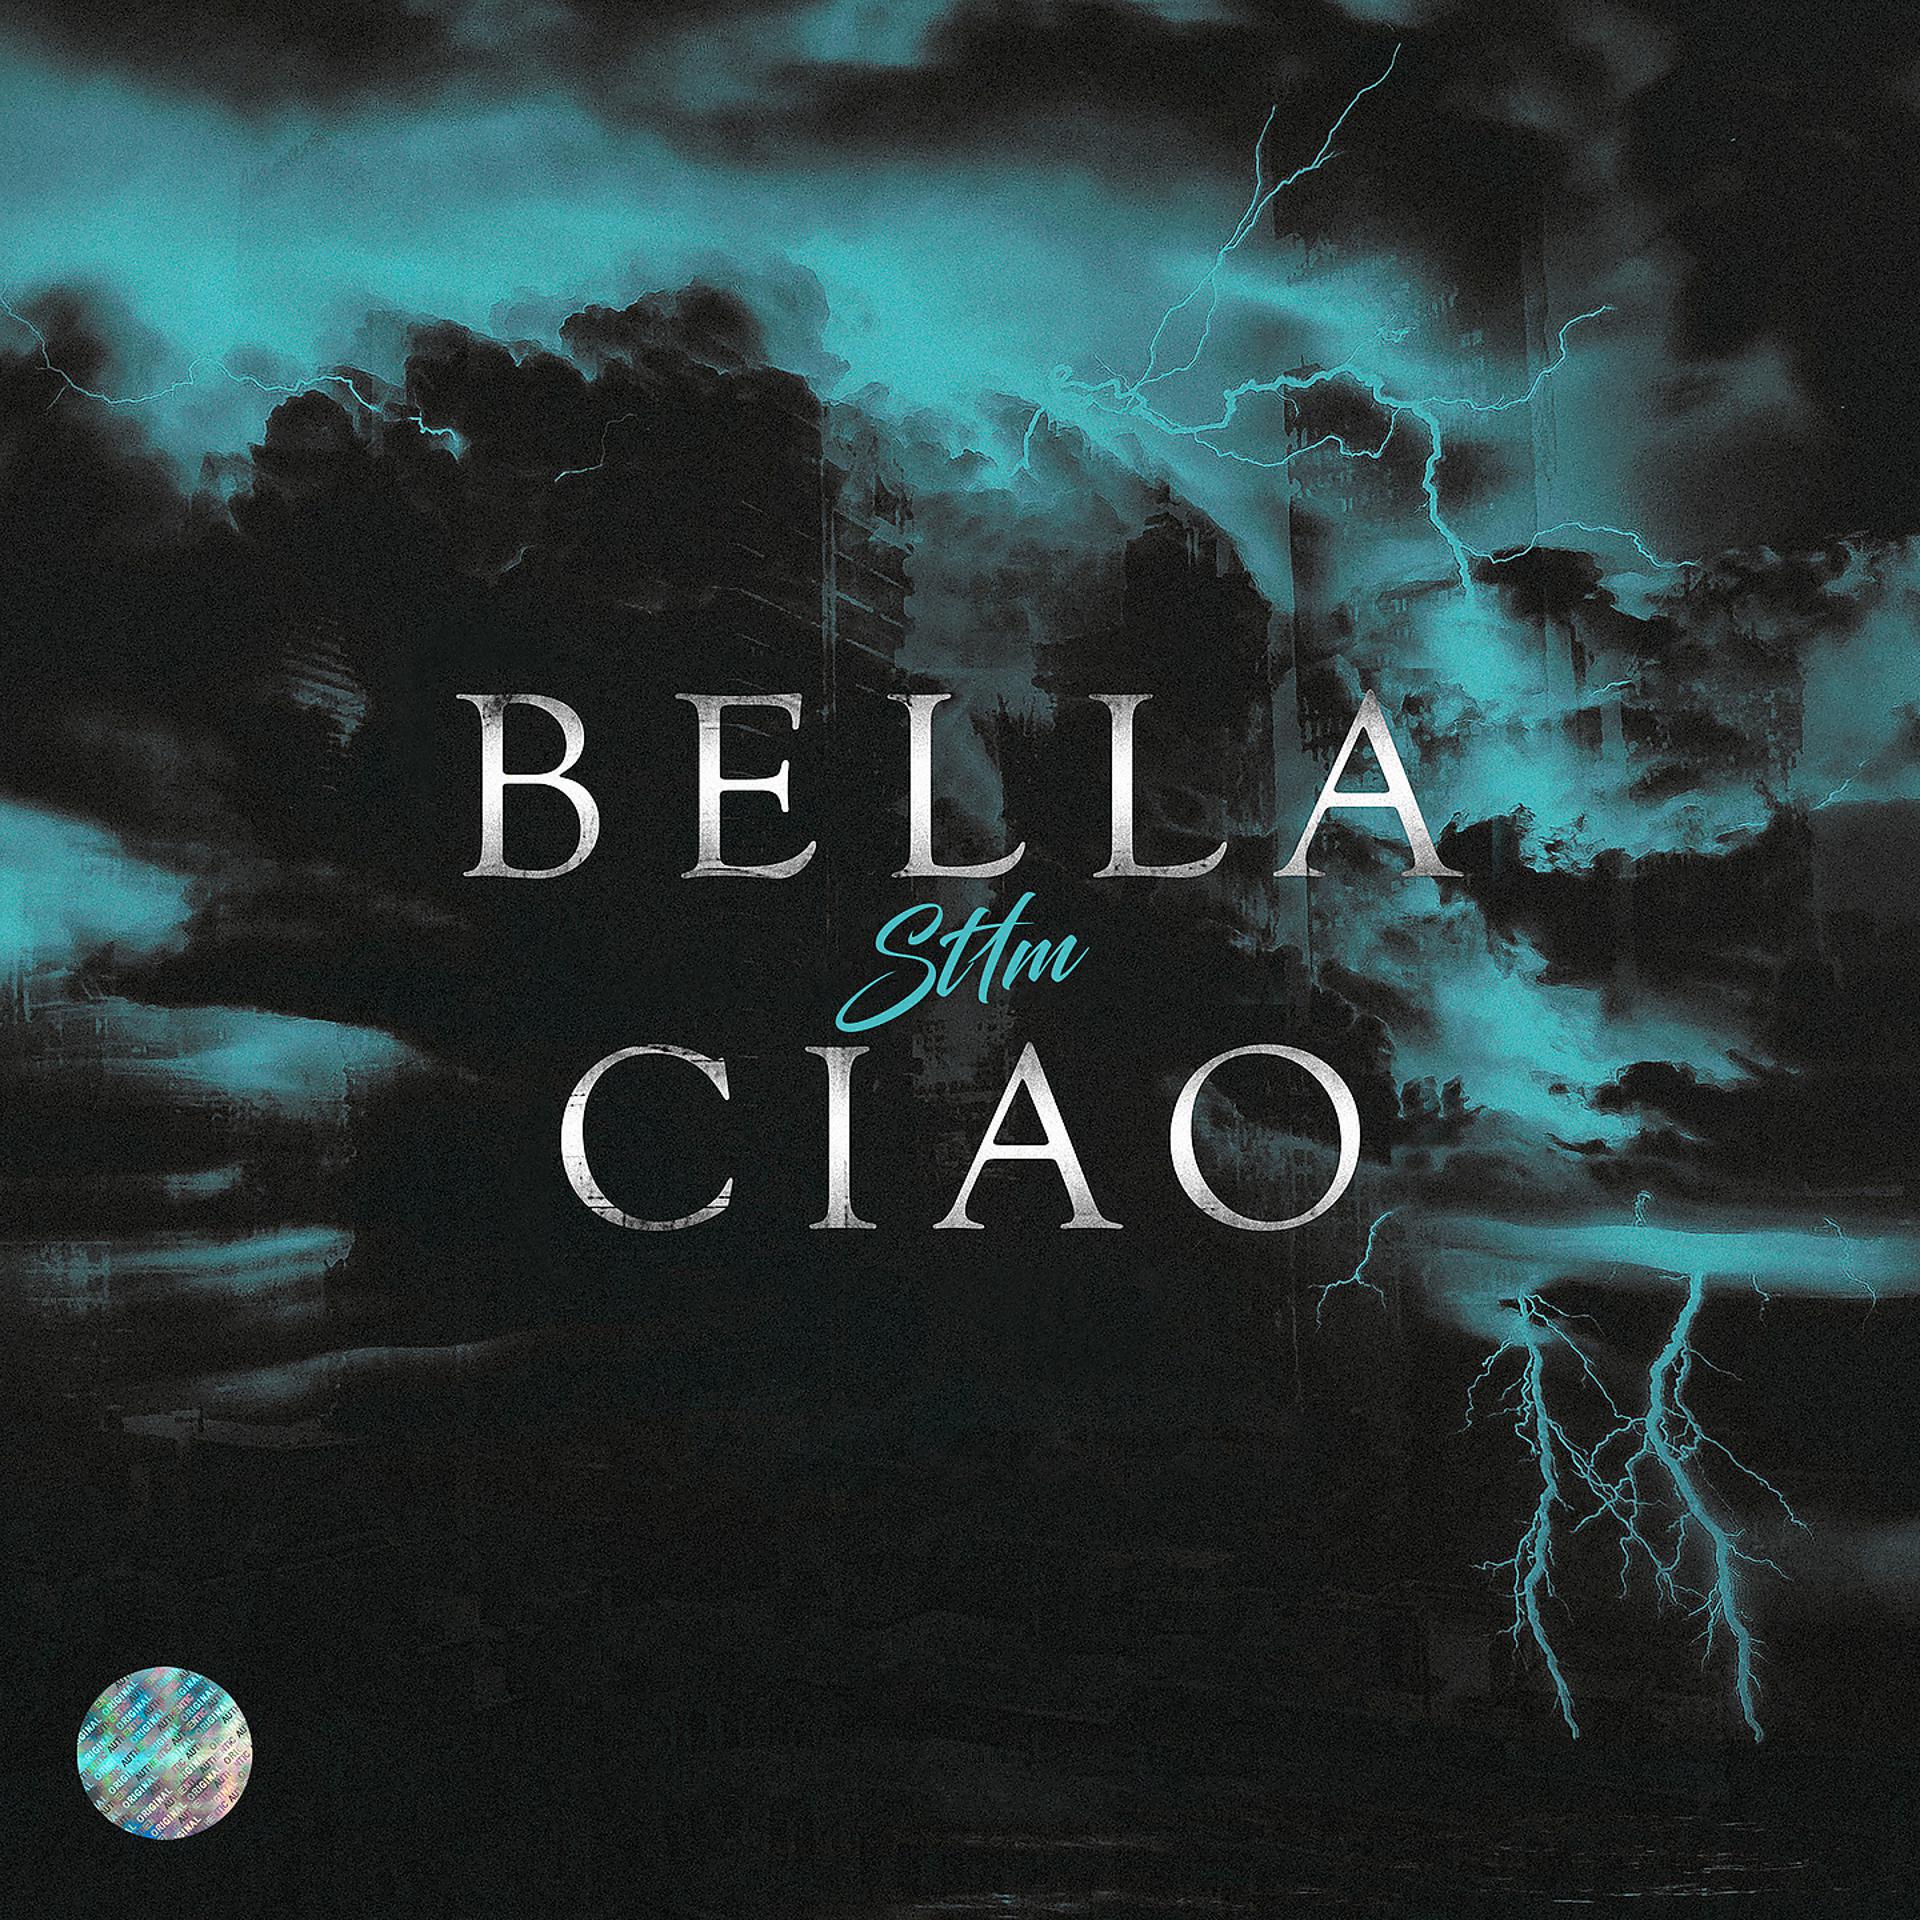 Постер к треку St1m - Bella Ciao (Из к/ф "Детективное агентство Мухича")